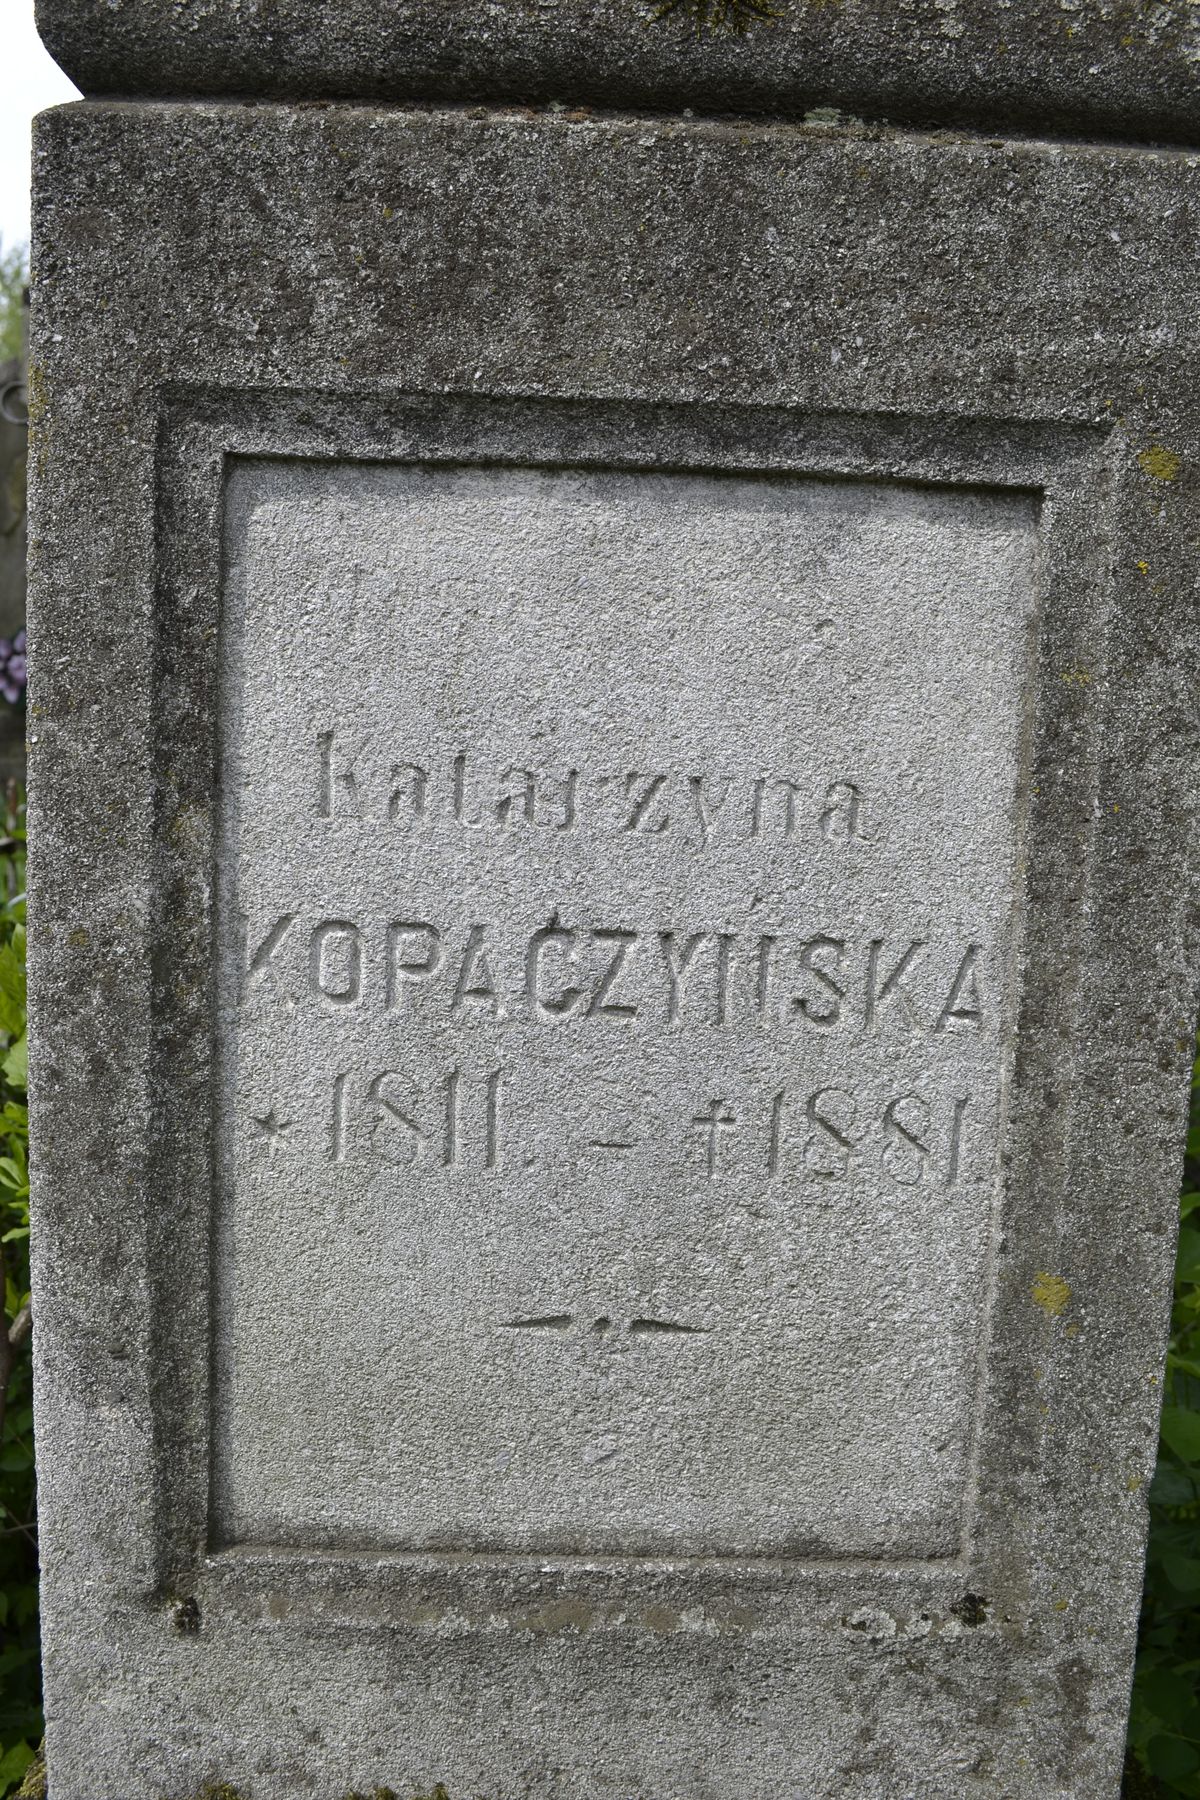 Inscription on the tombstone of Katarzyna Kopaczynska, Ternopil cemetery, as of 2016